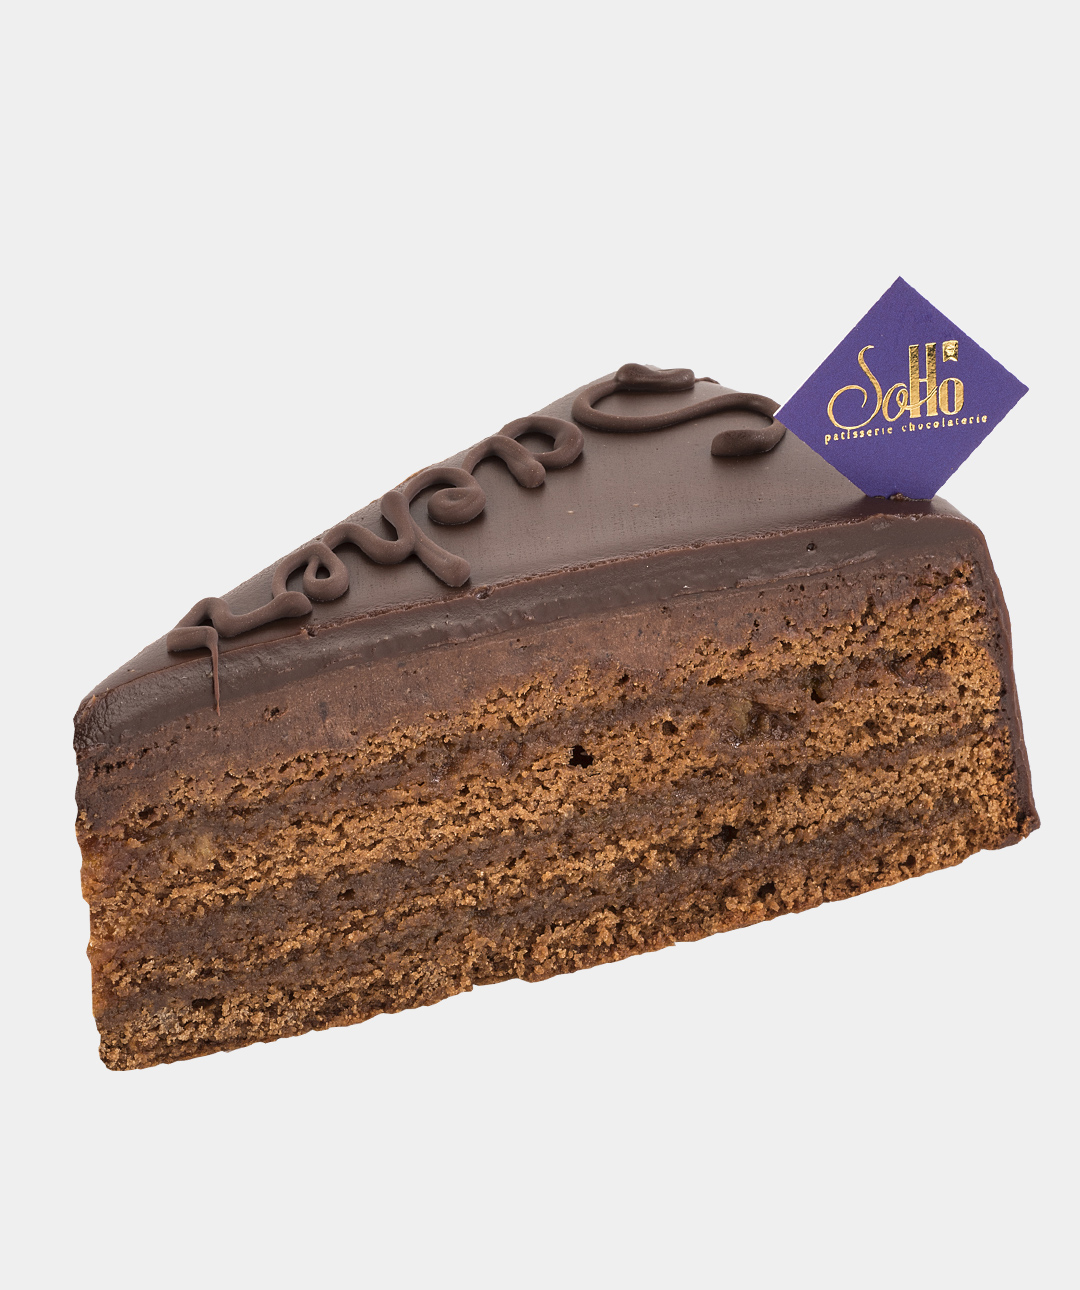 Cake «Soho» Sacher, big